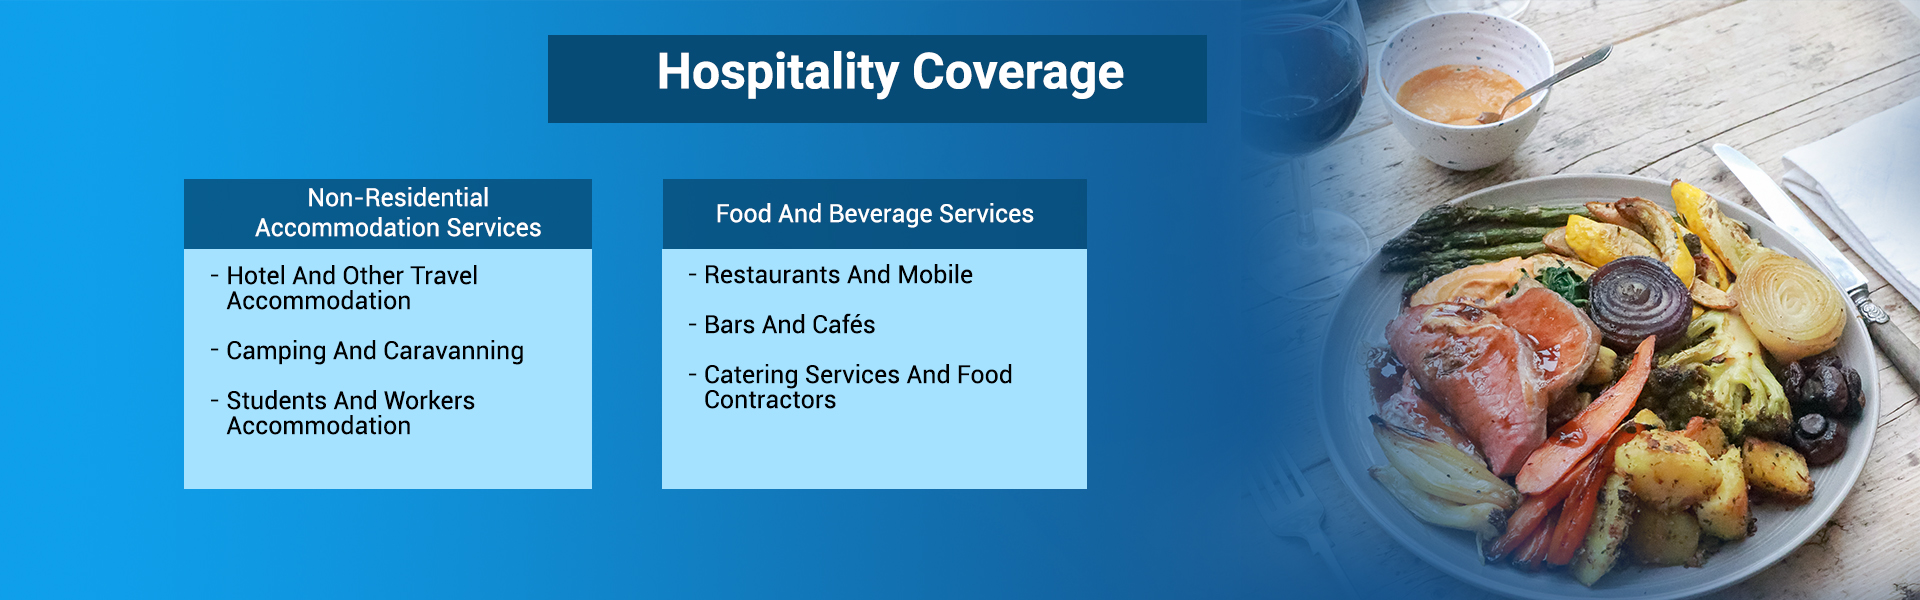 Hospitality Coverage